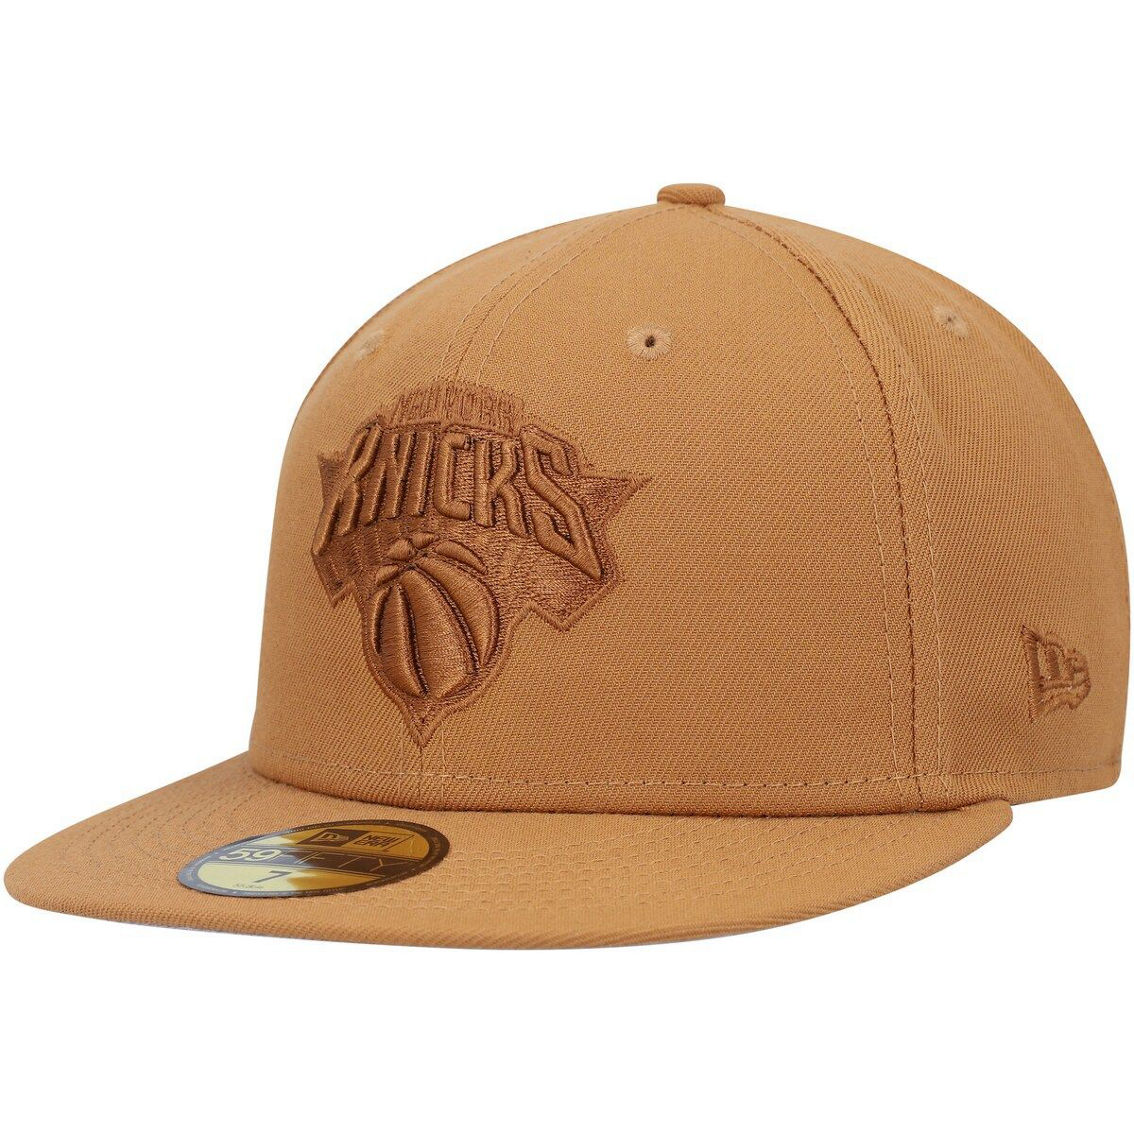 New York Knicks New Era 59FIFTY Fitted Hat - Size 7 1/2 Orange Brim